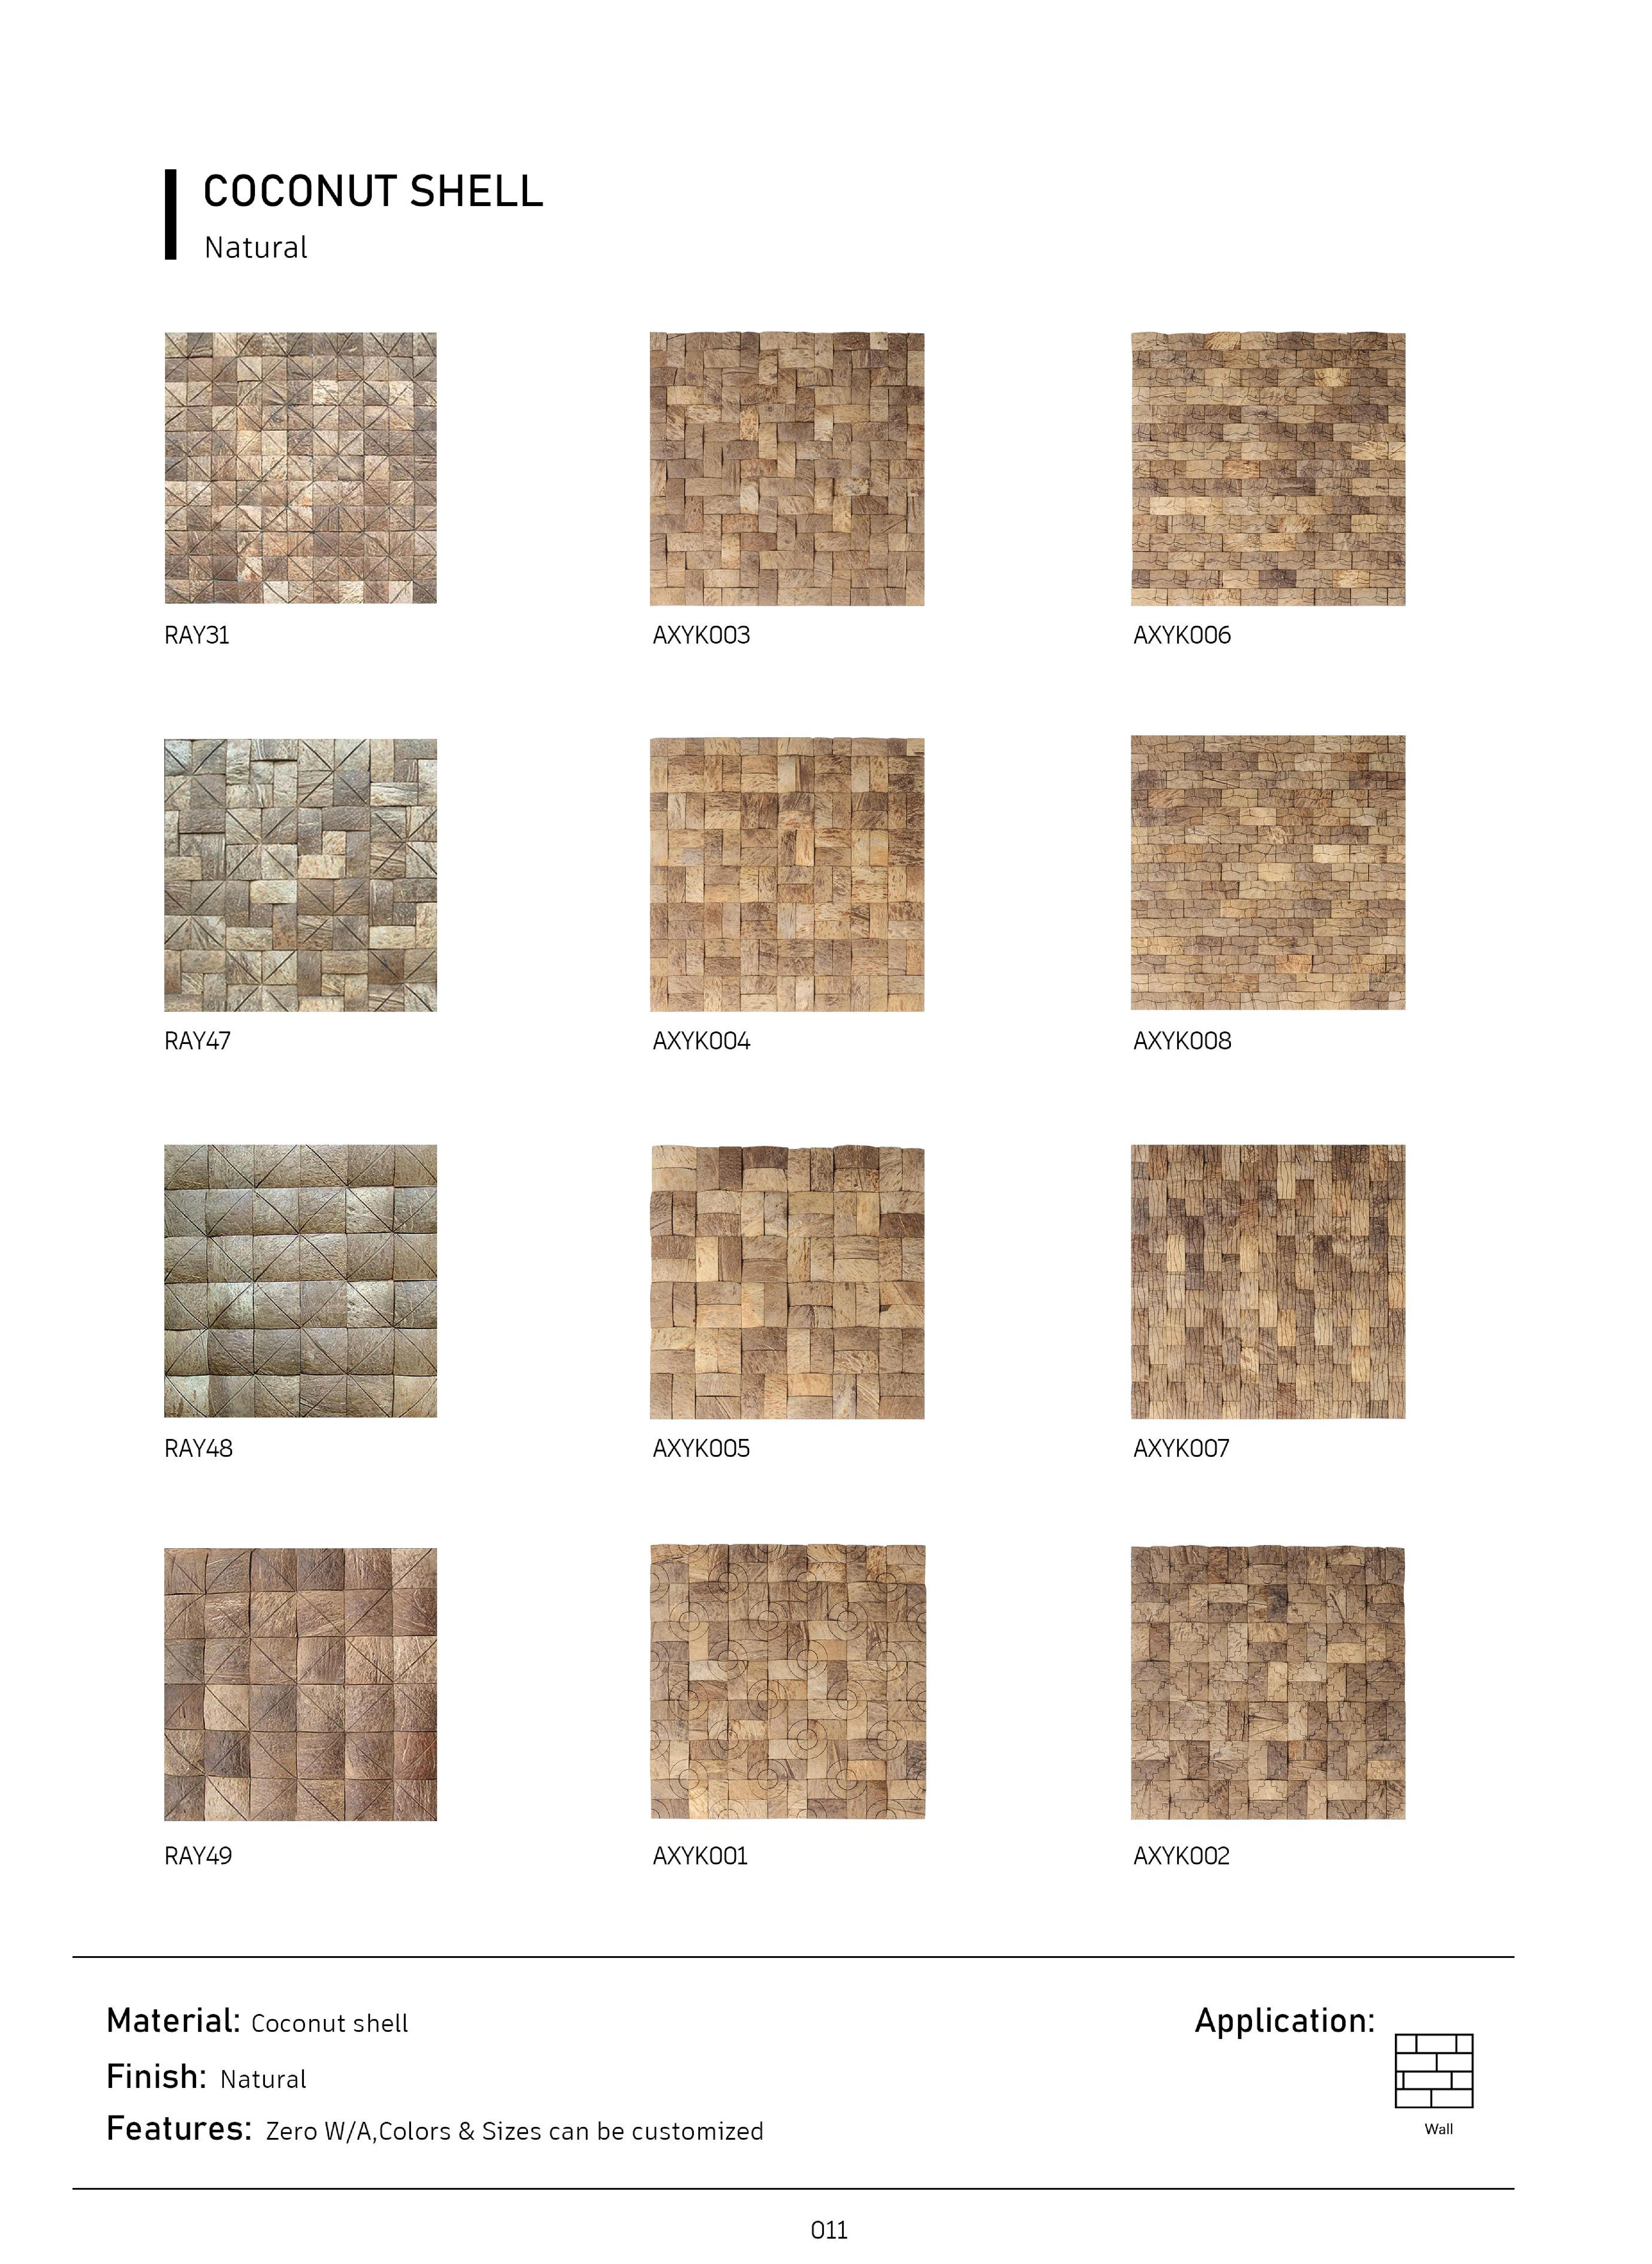 Coconut shell mosaic - Ralart Mosaic_12.jpg